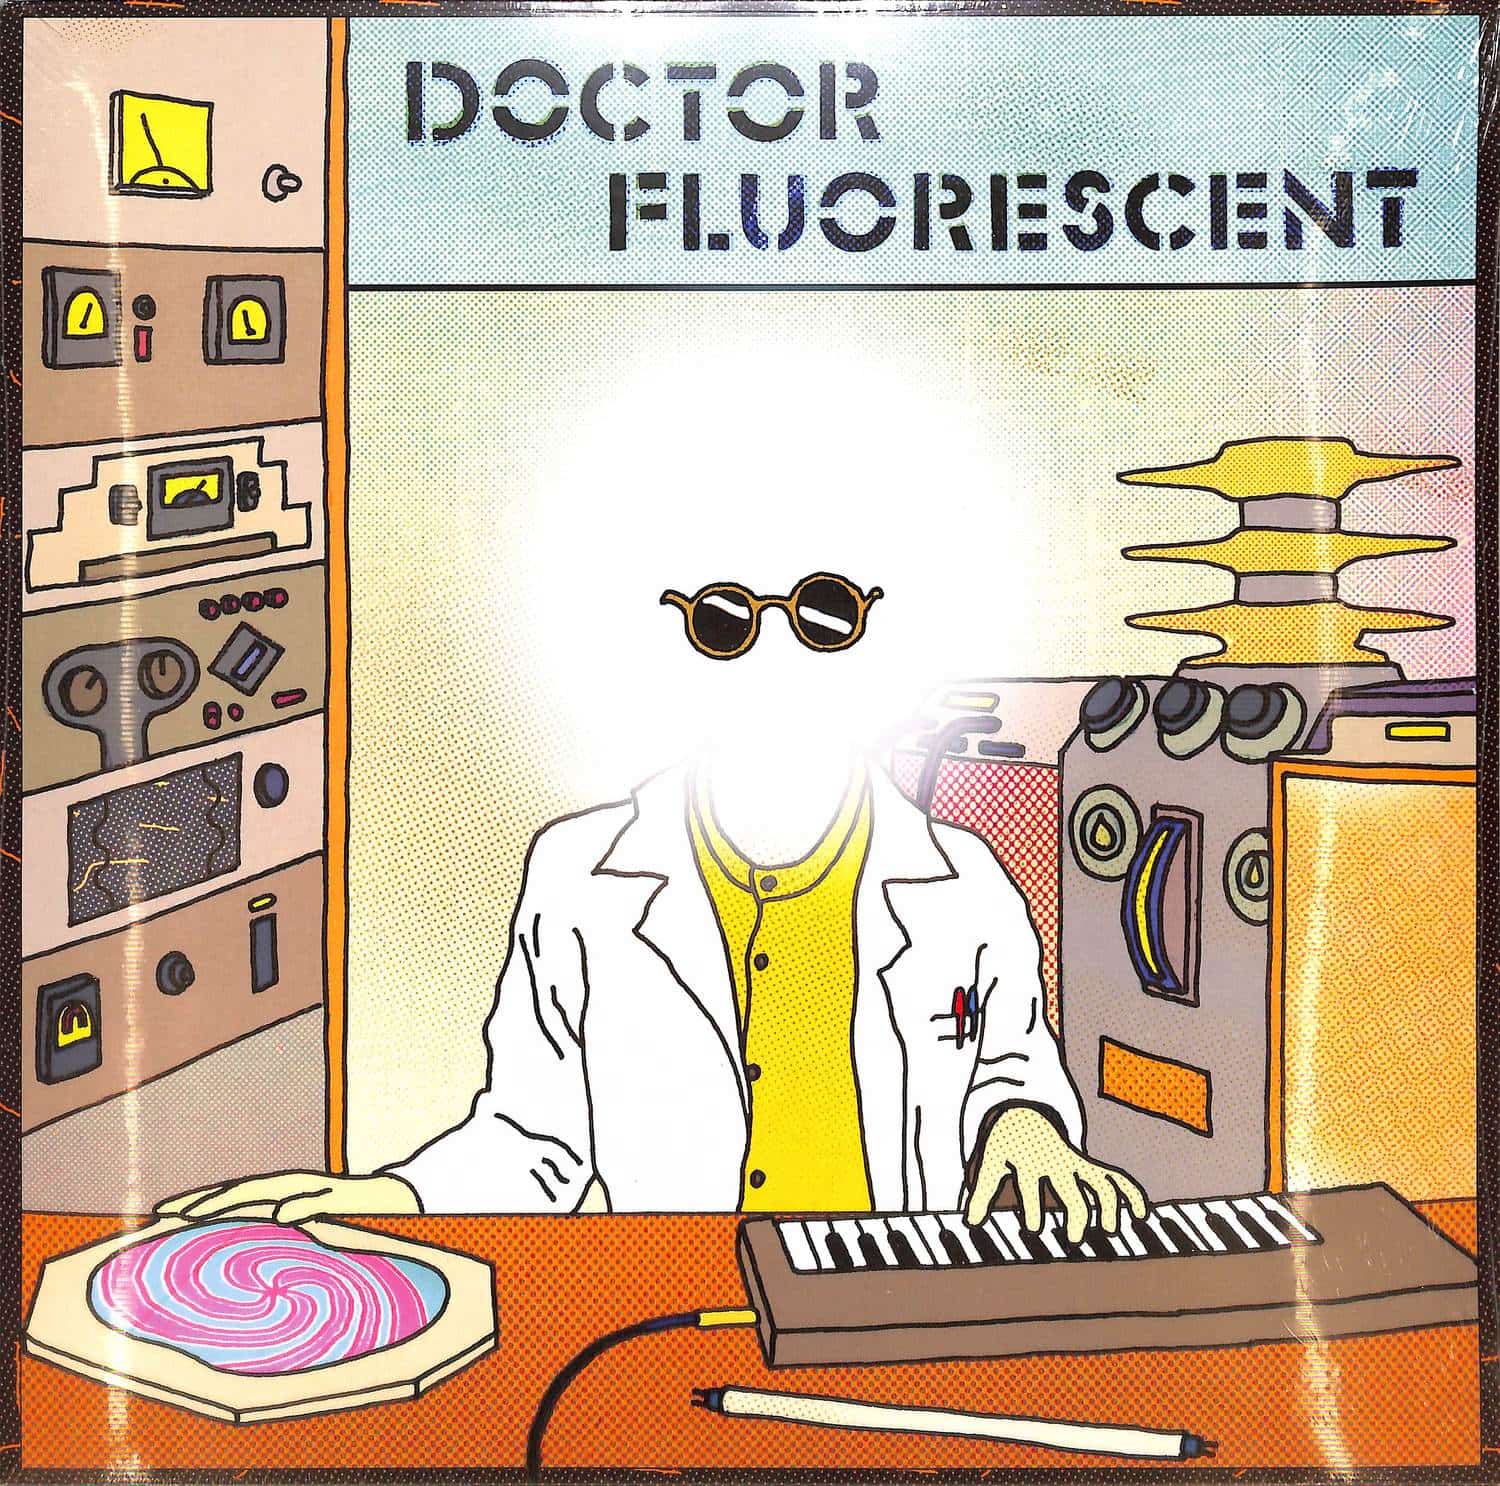 Doctor Fluorescent - DOCTOR FLUORESCENT 